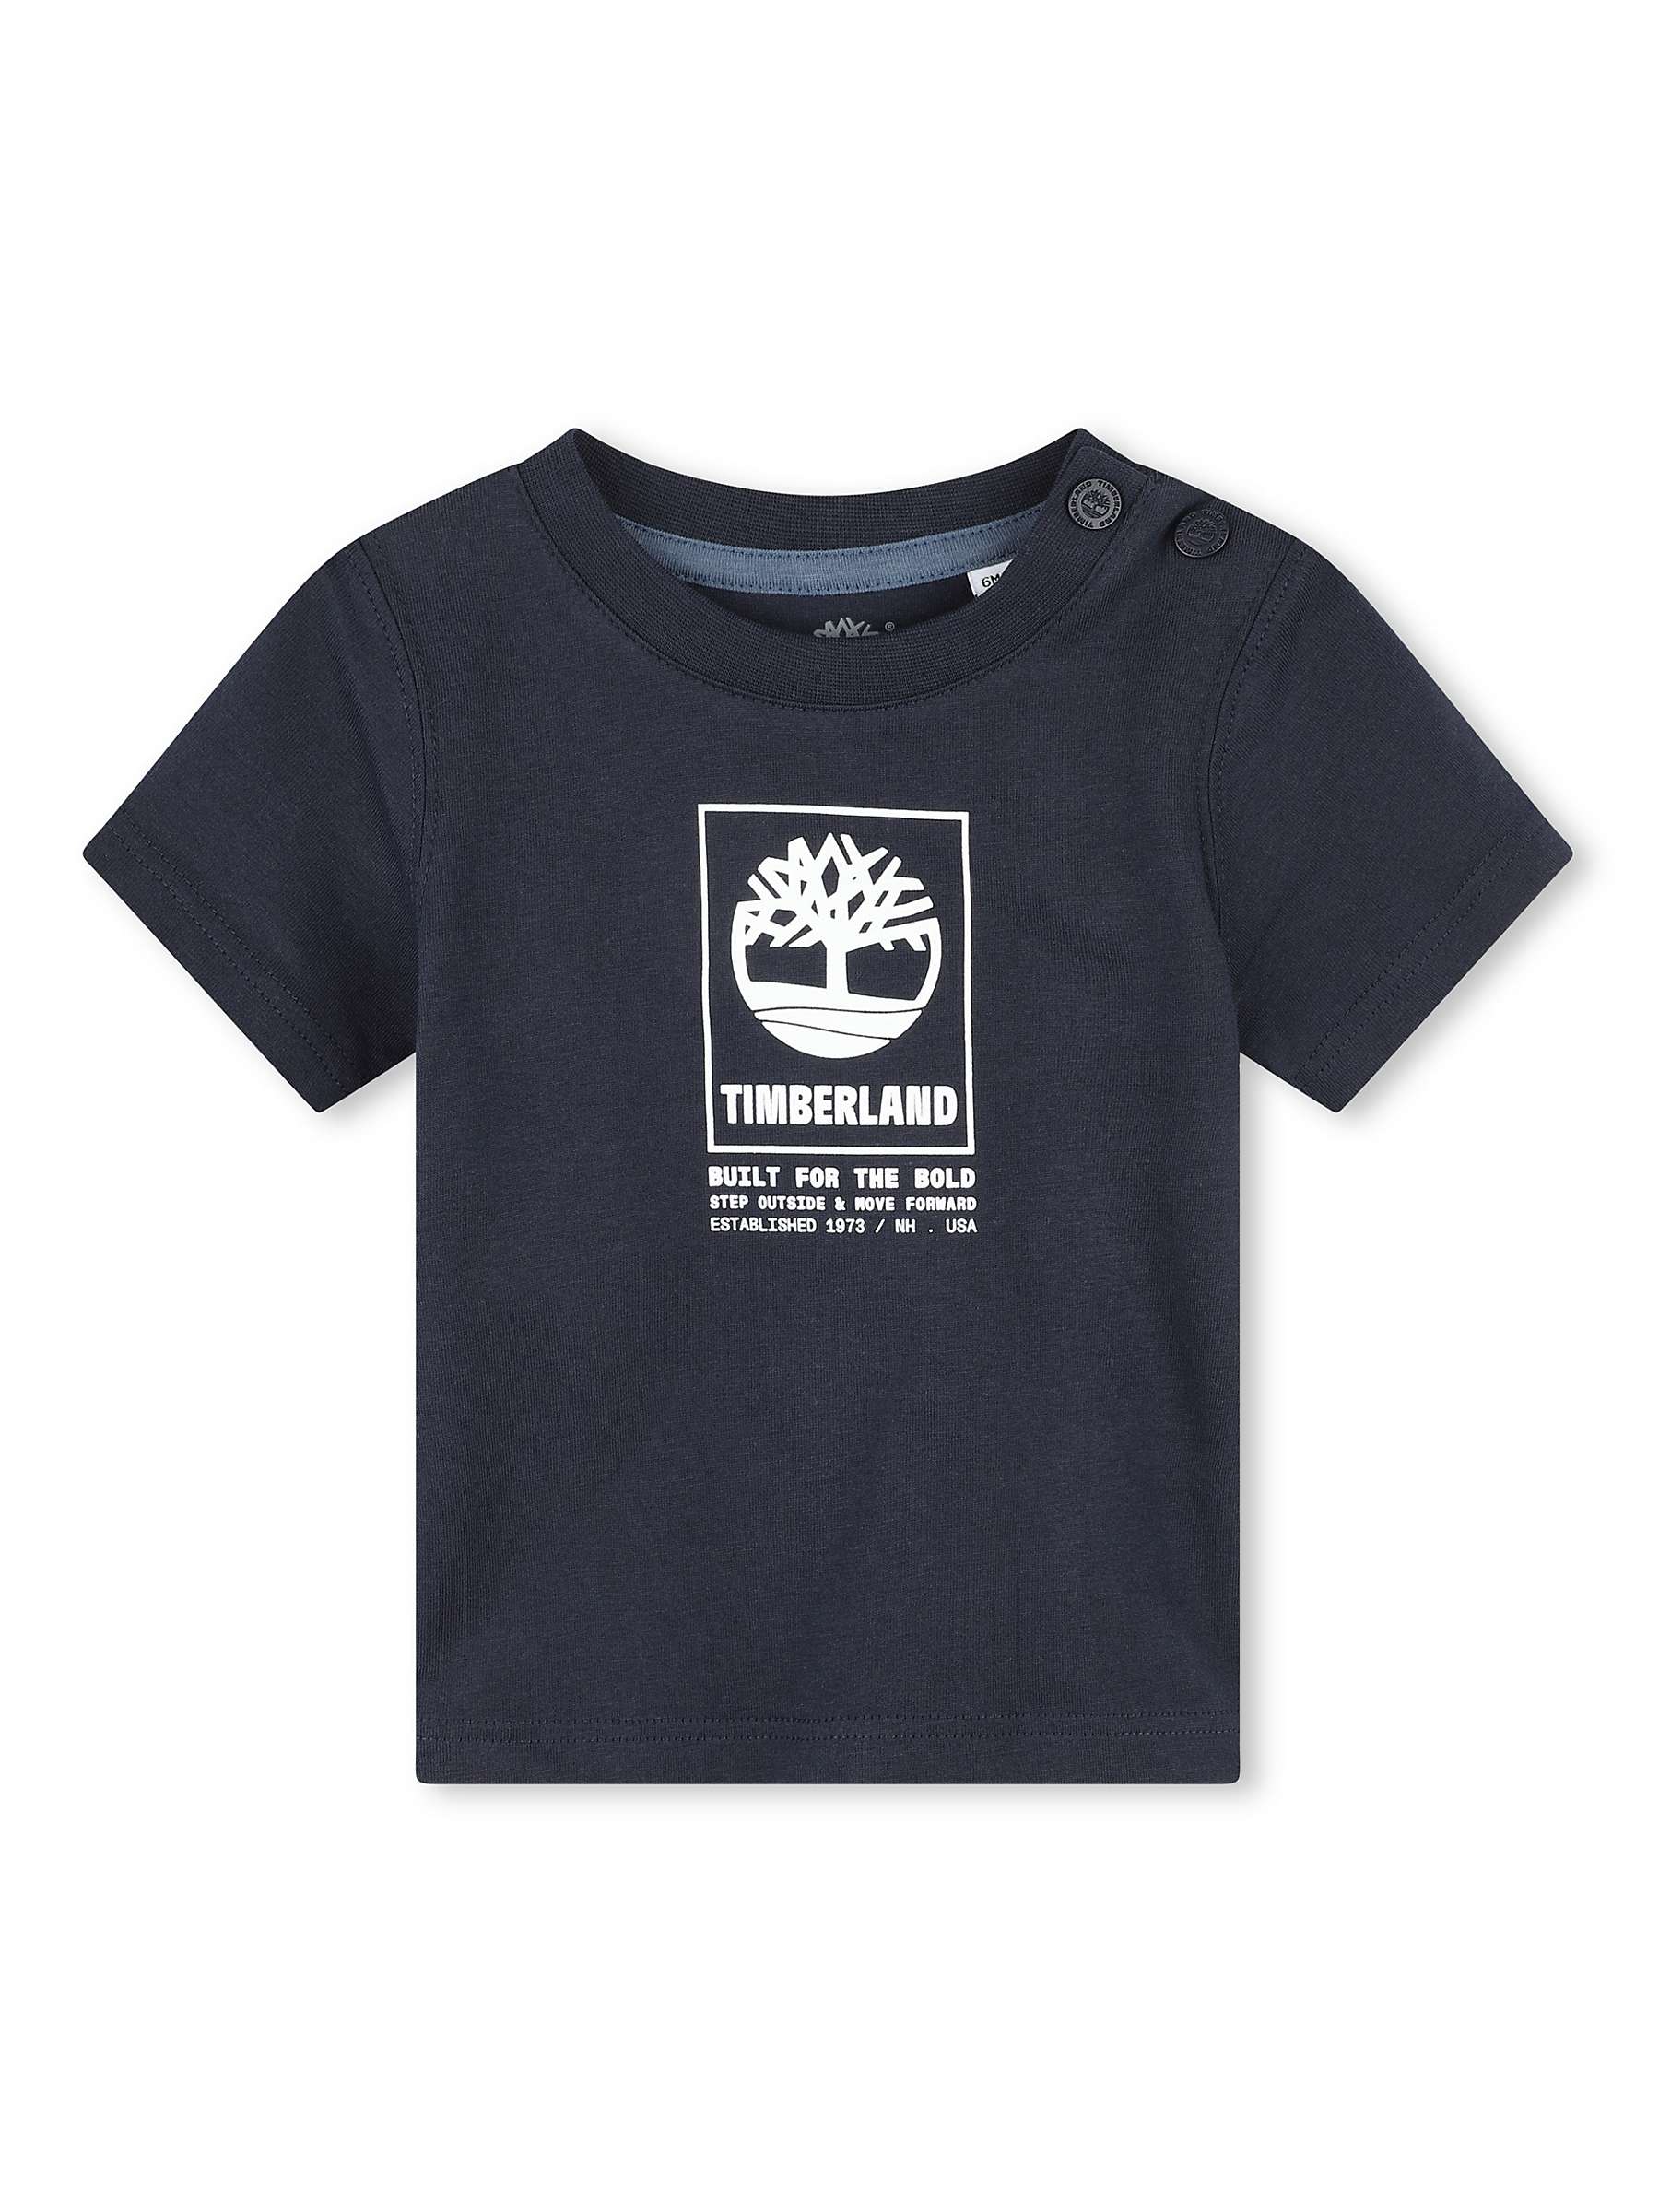 Buy Timberland Baby Short Sleeve T-Shirt, Navy Online at johnlewis.com